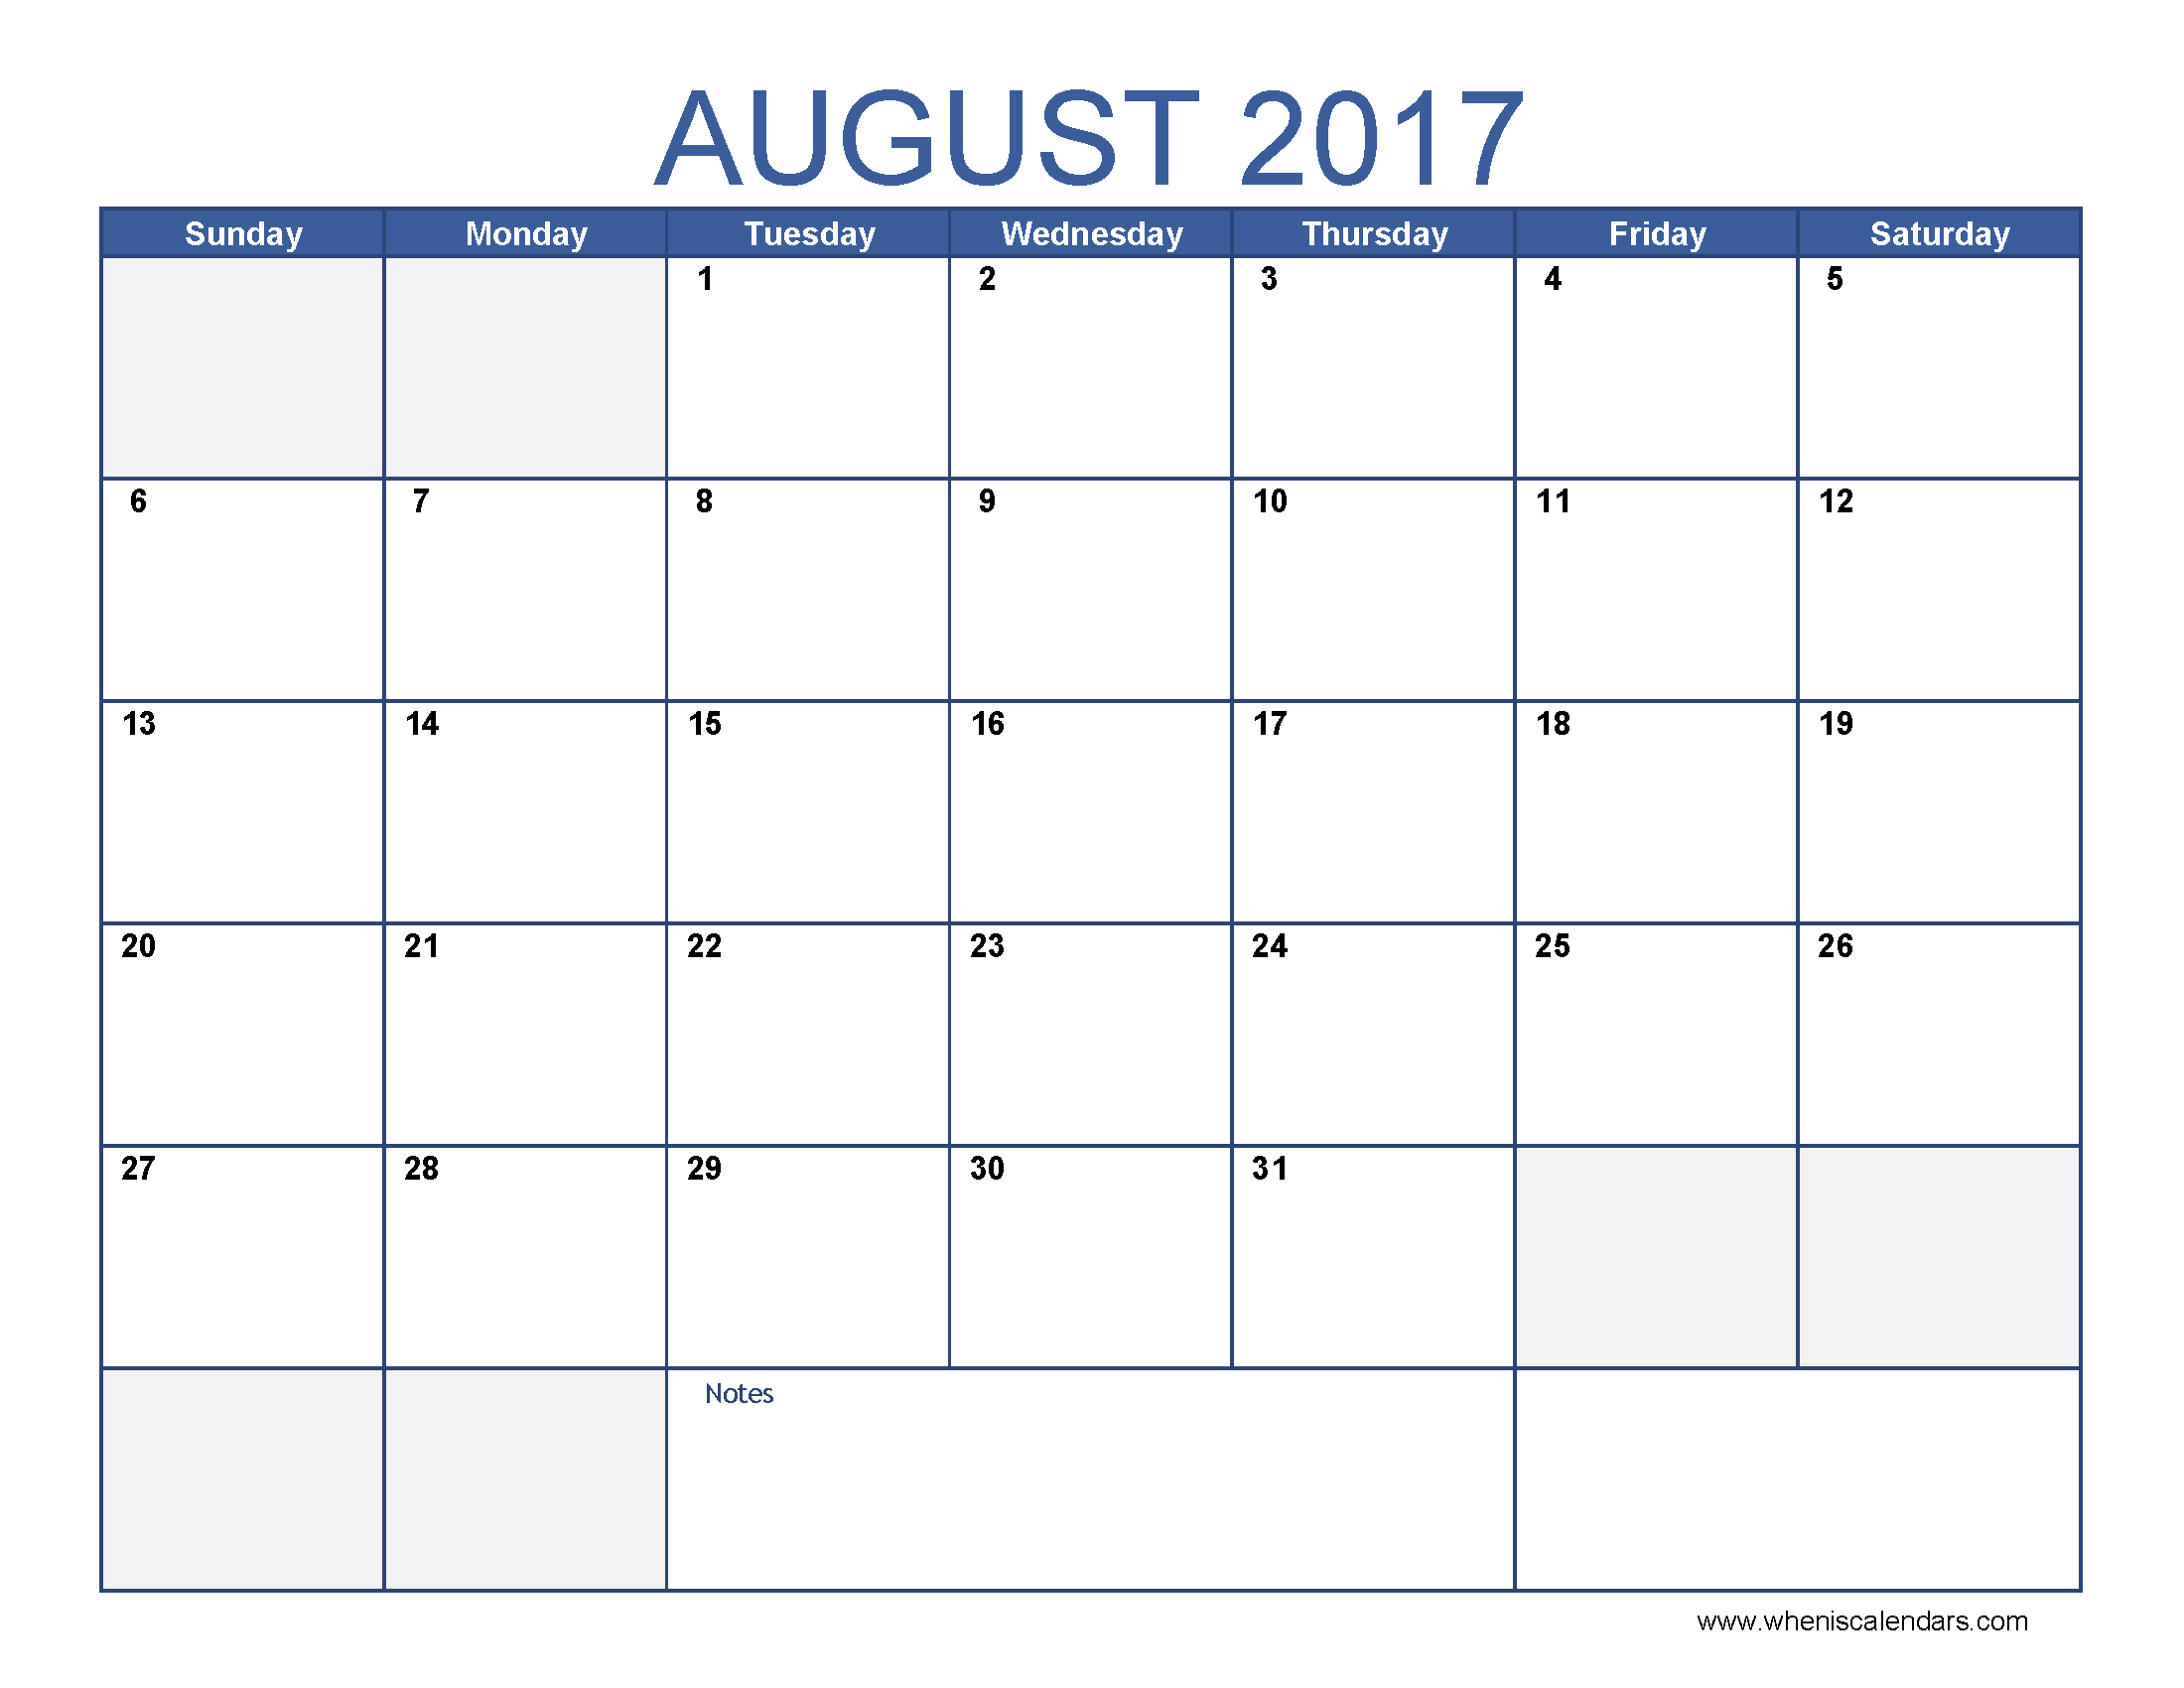 August 2017 Calendar Template | blank calendar printable